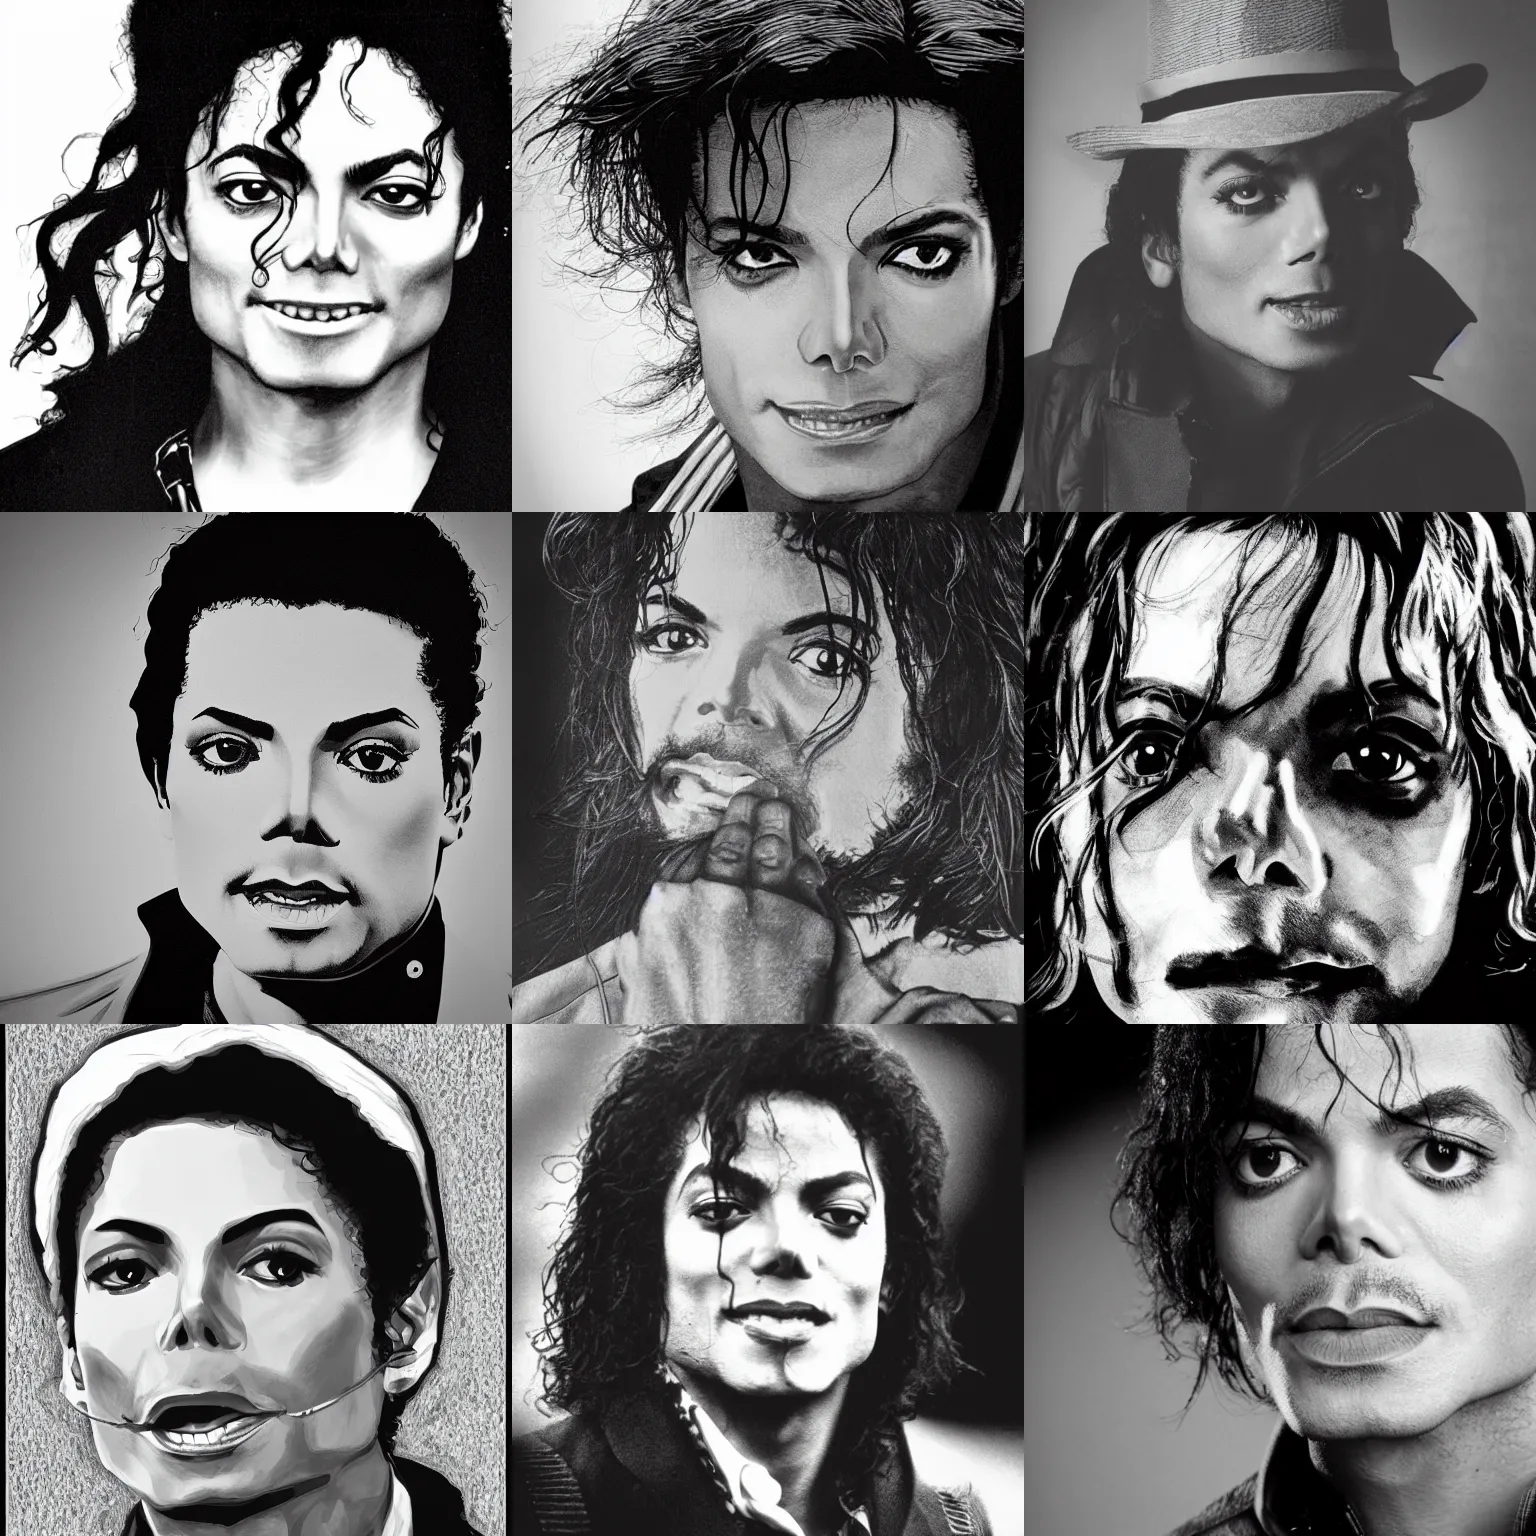 Prompt: Michael Jackson, Michael_jackson, photorealistic, photography, black and white photo headshot